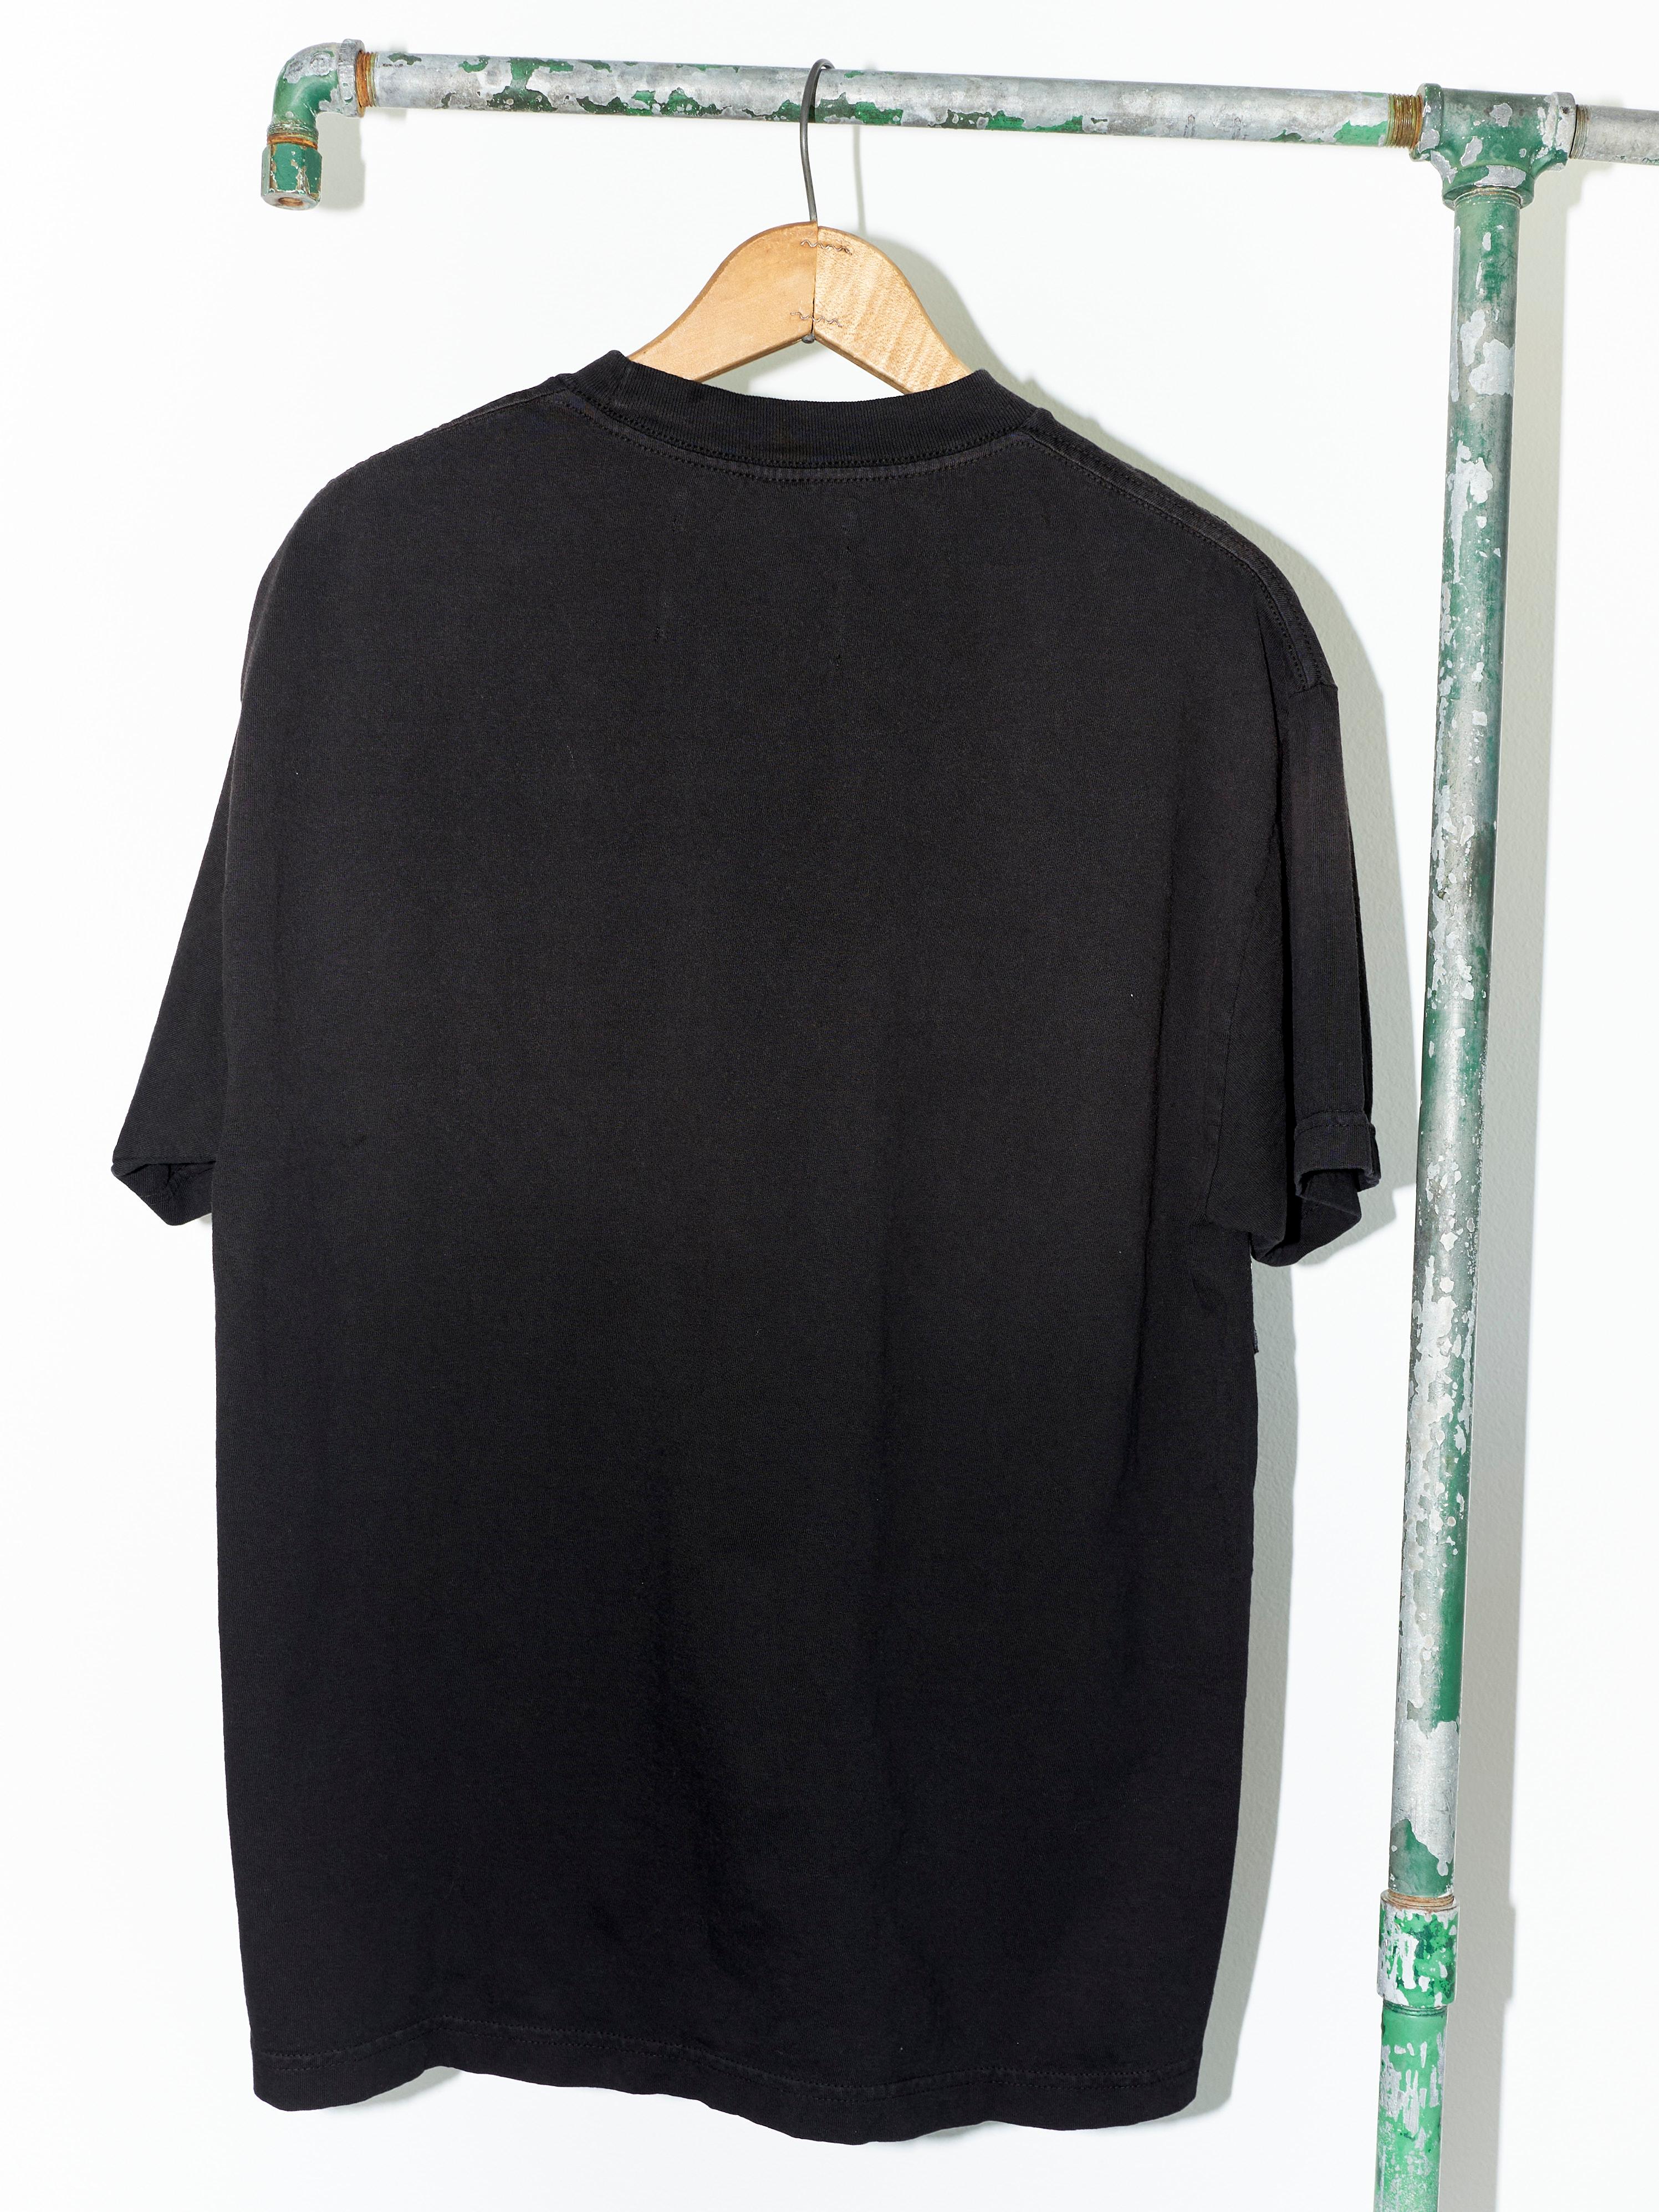 J Dauphin Black T-Shirt Embellished  Patch Work Sequin Silk Body Cotton  5